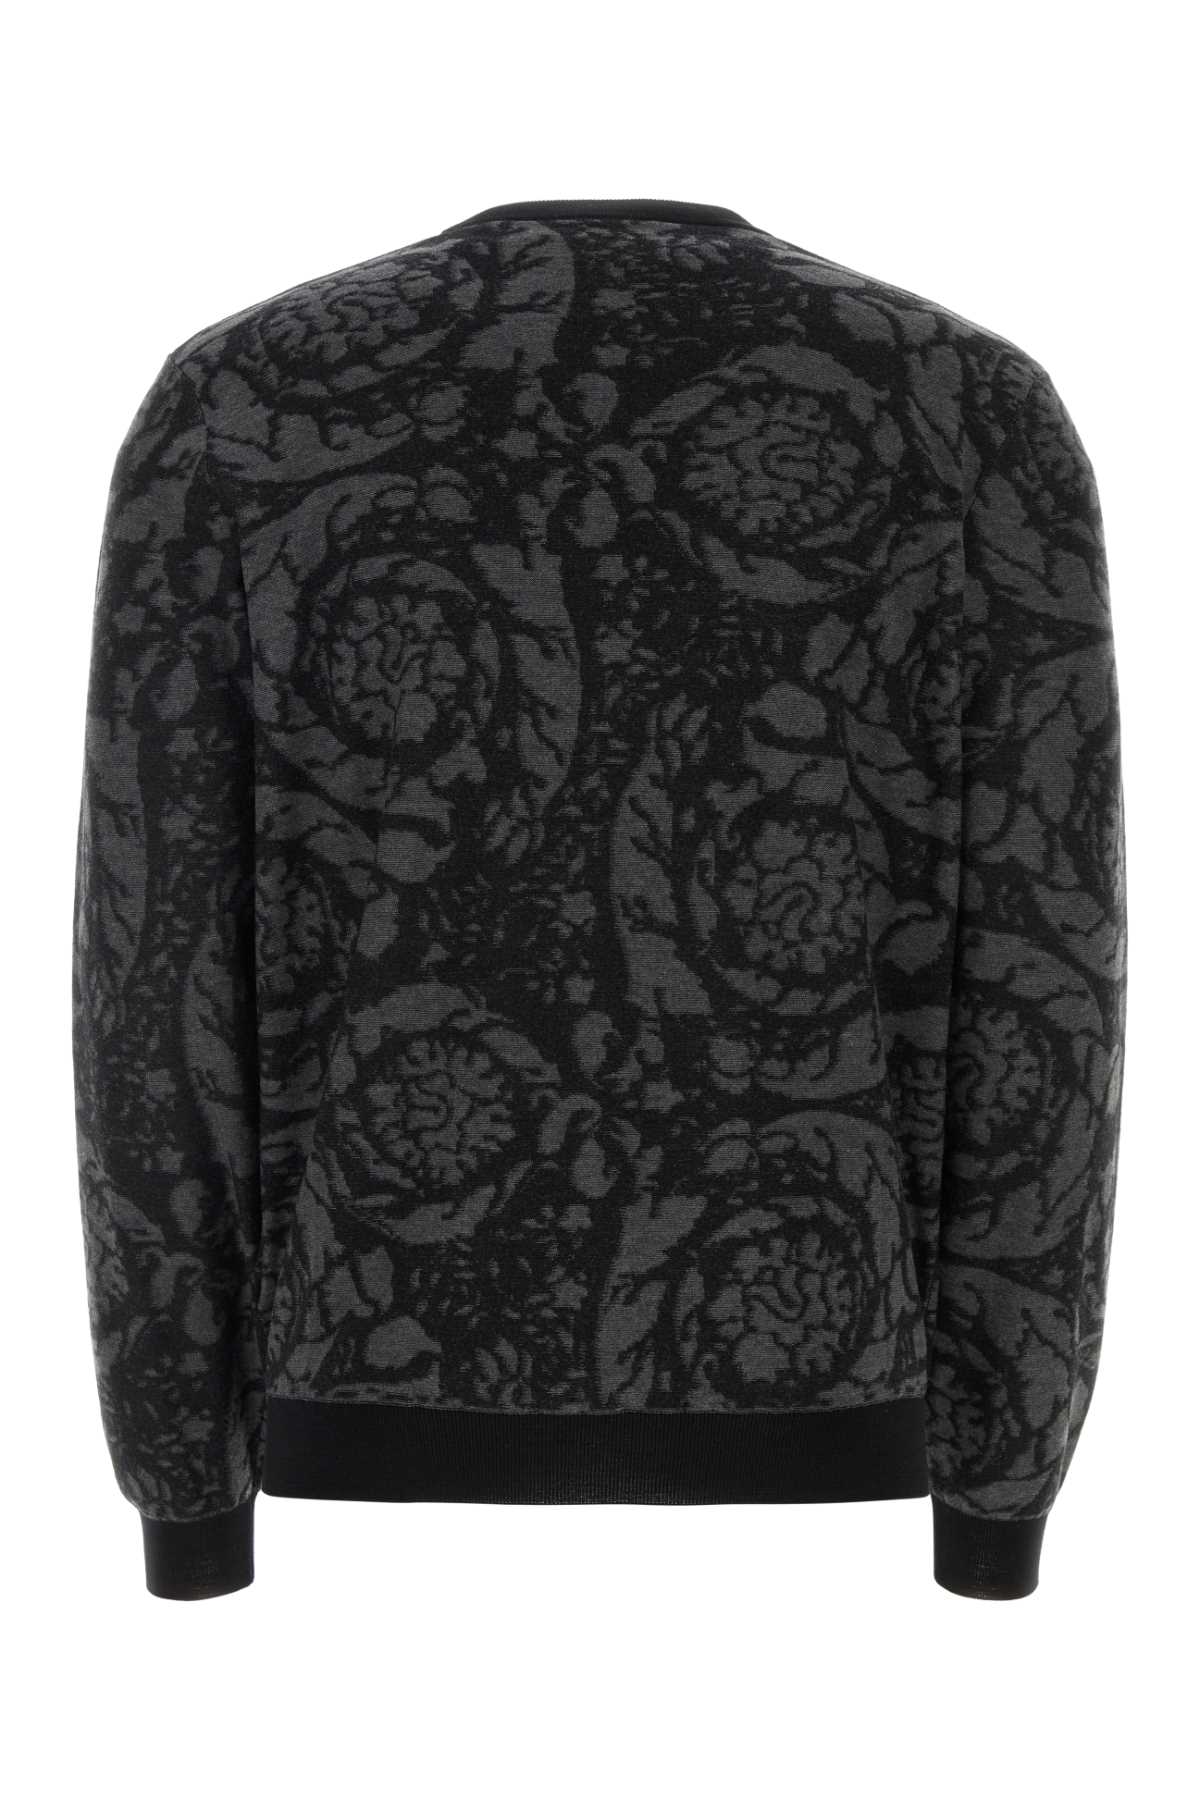 Versace Embroidered Wool Blend Jumper In Blackgrey